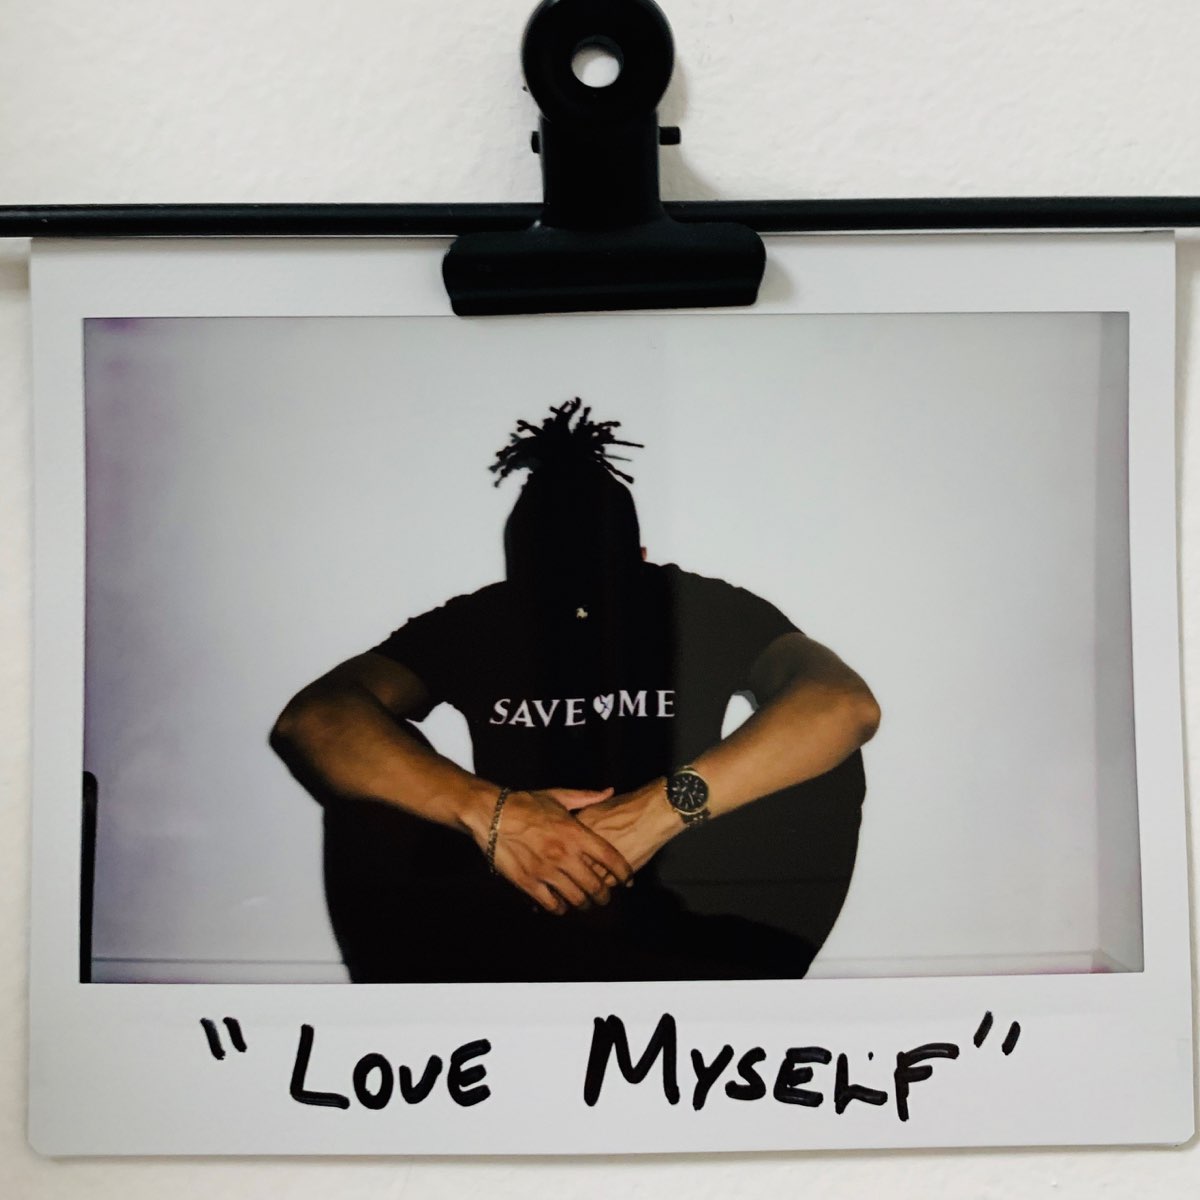 Love myself. Myself певец. Альбом i Love myself. Watch myself